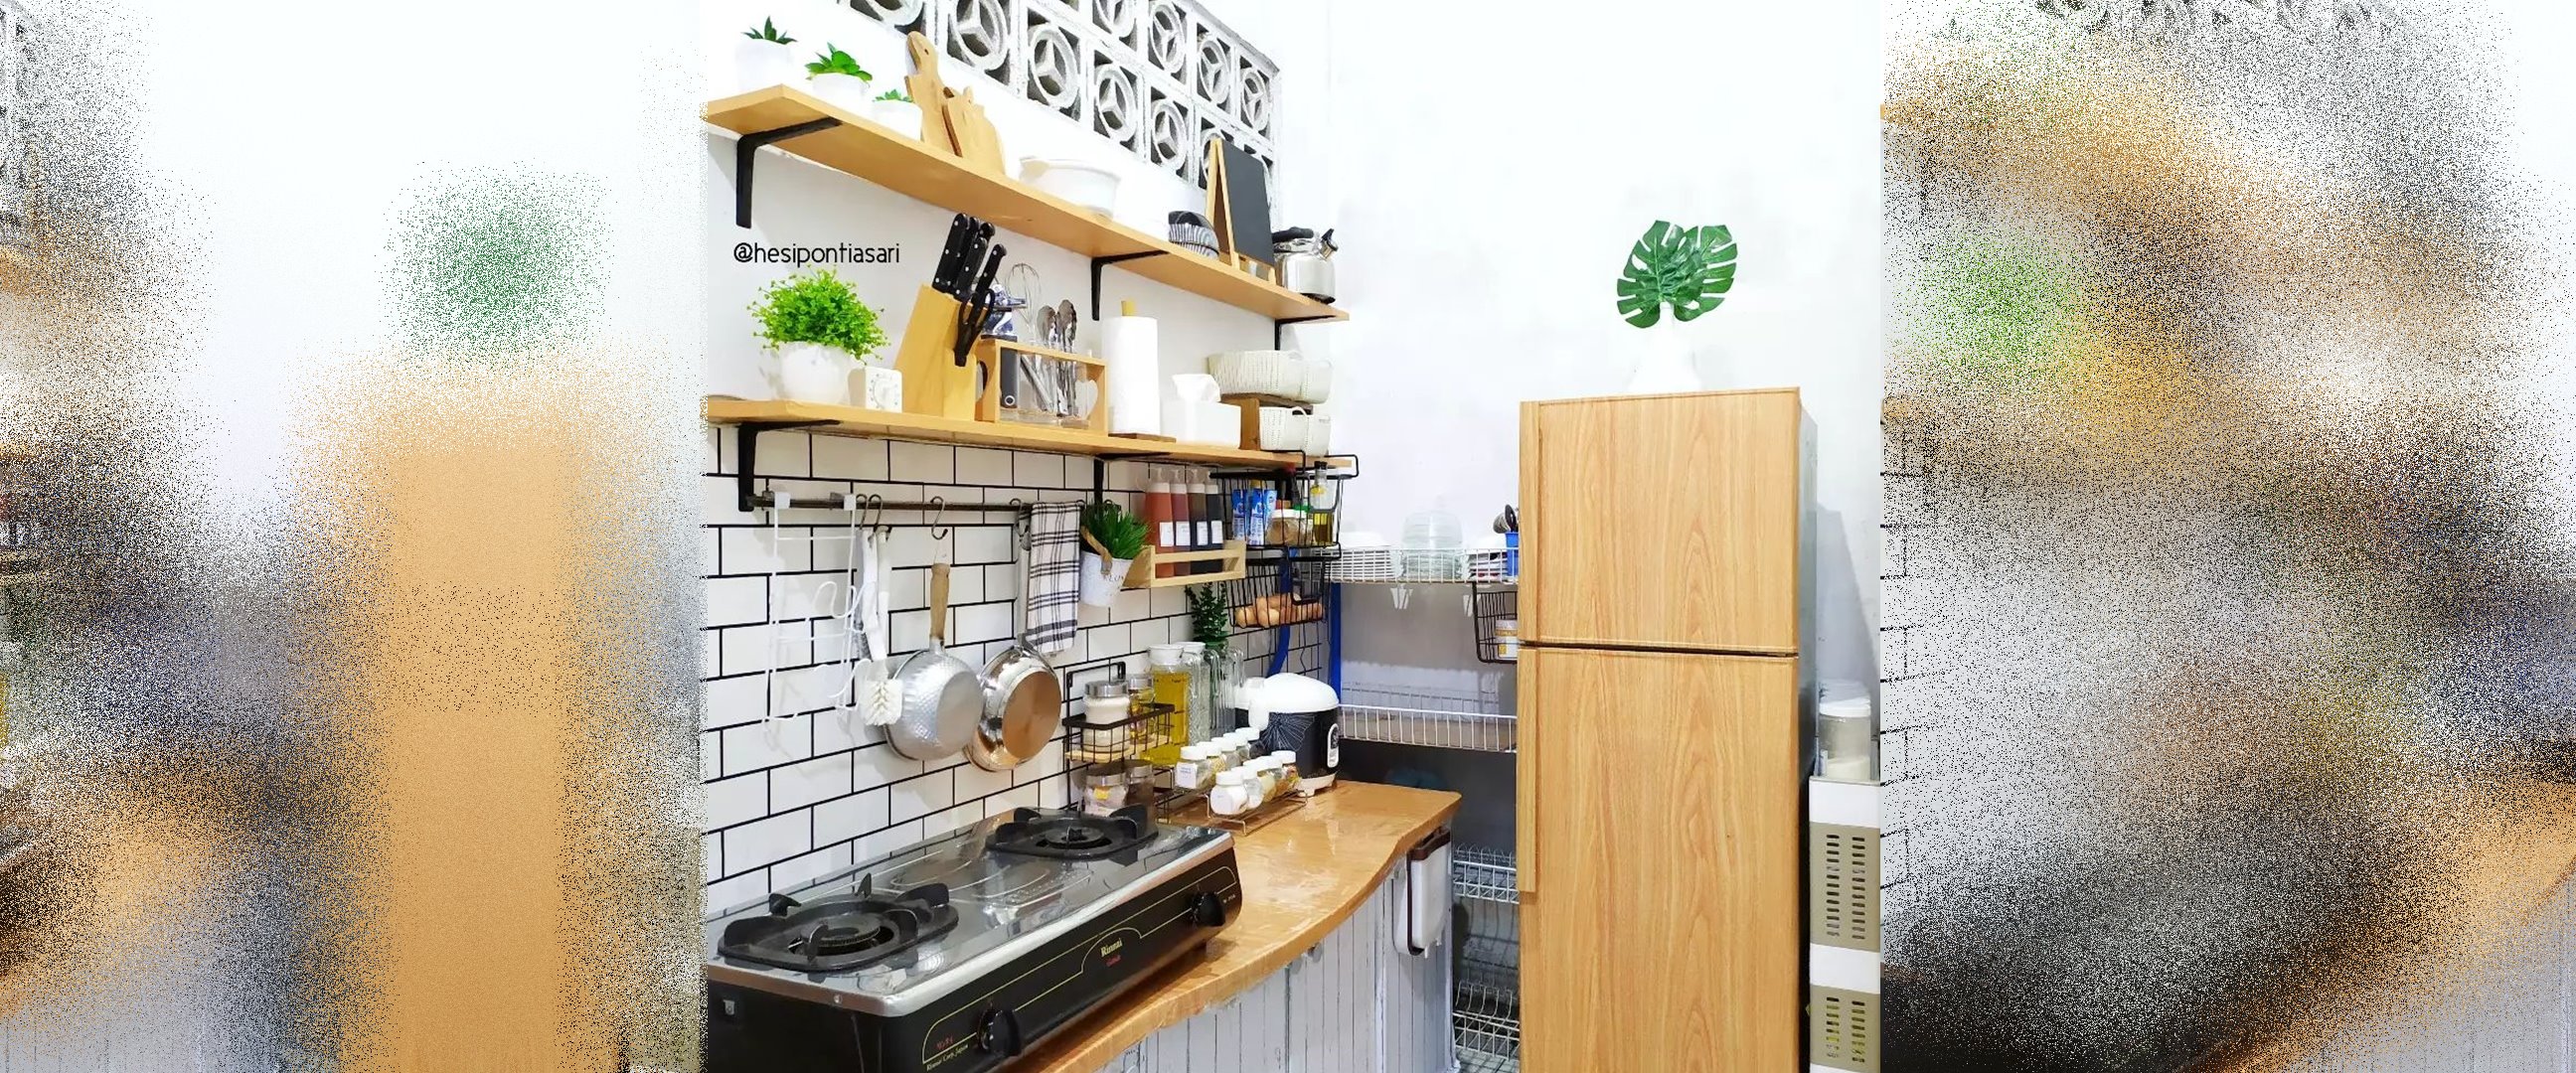 11 Potret dapur tanpa kitchen set ini tetap estetik cuma pakai rak kayu, cocok buat emak antiribet